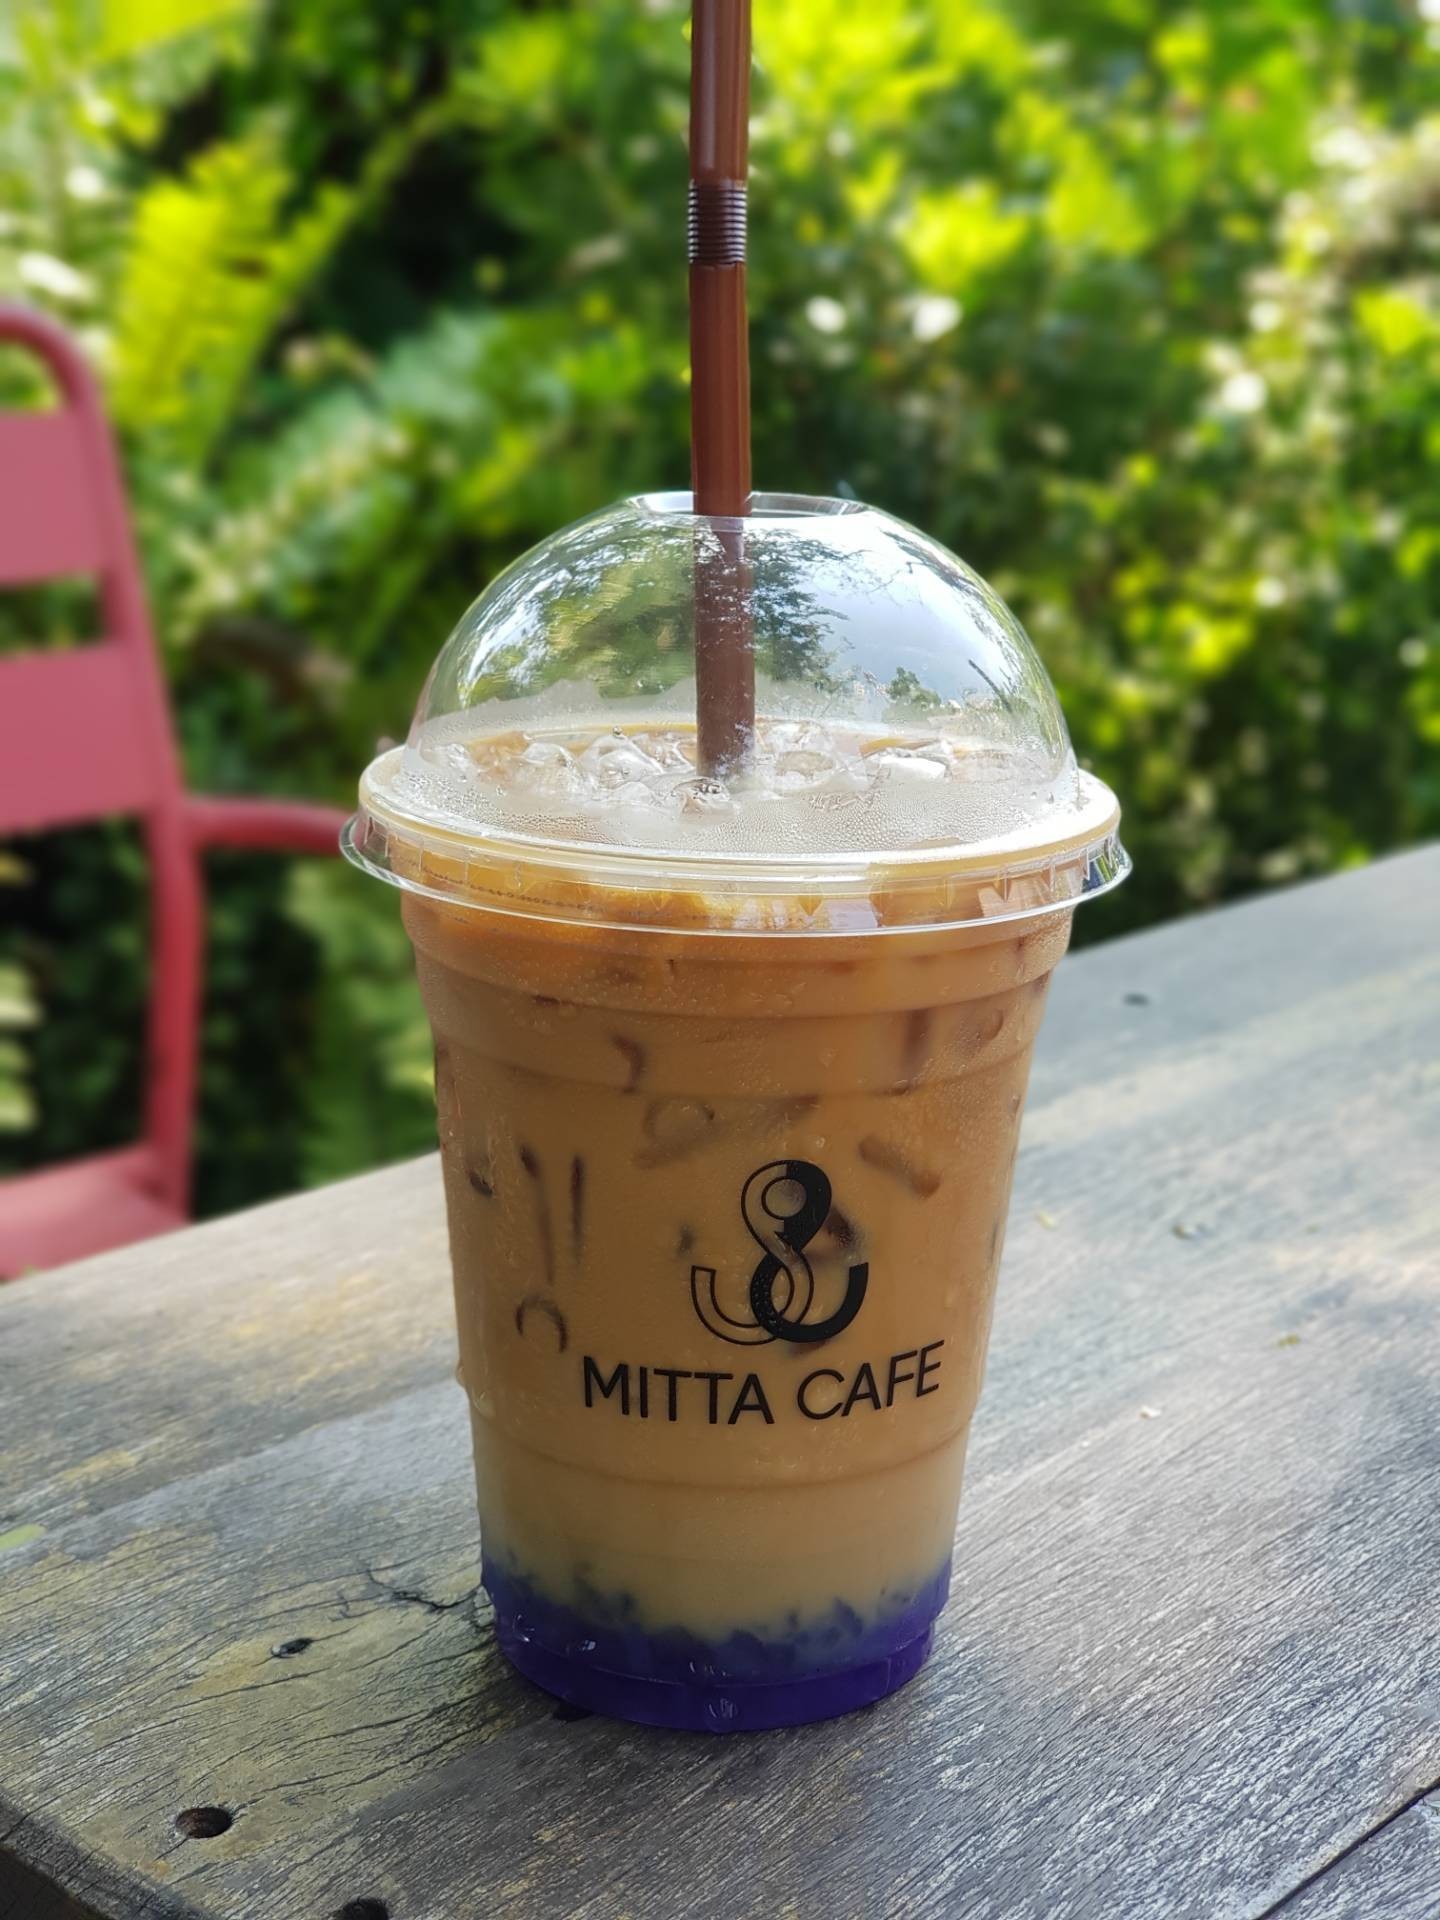 Mitta Cafe